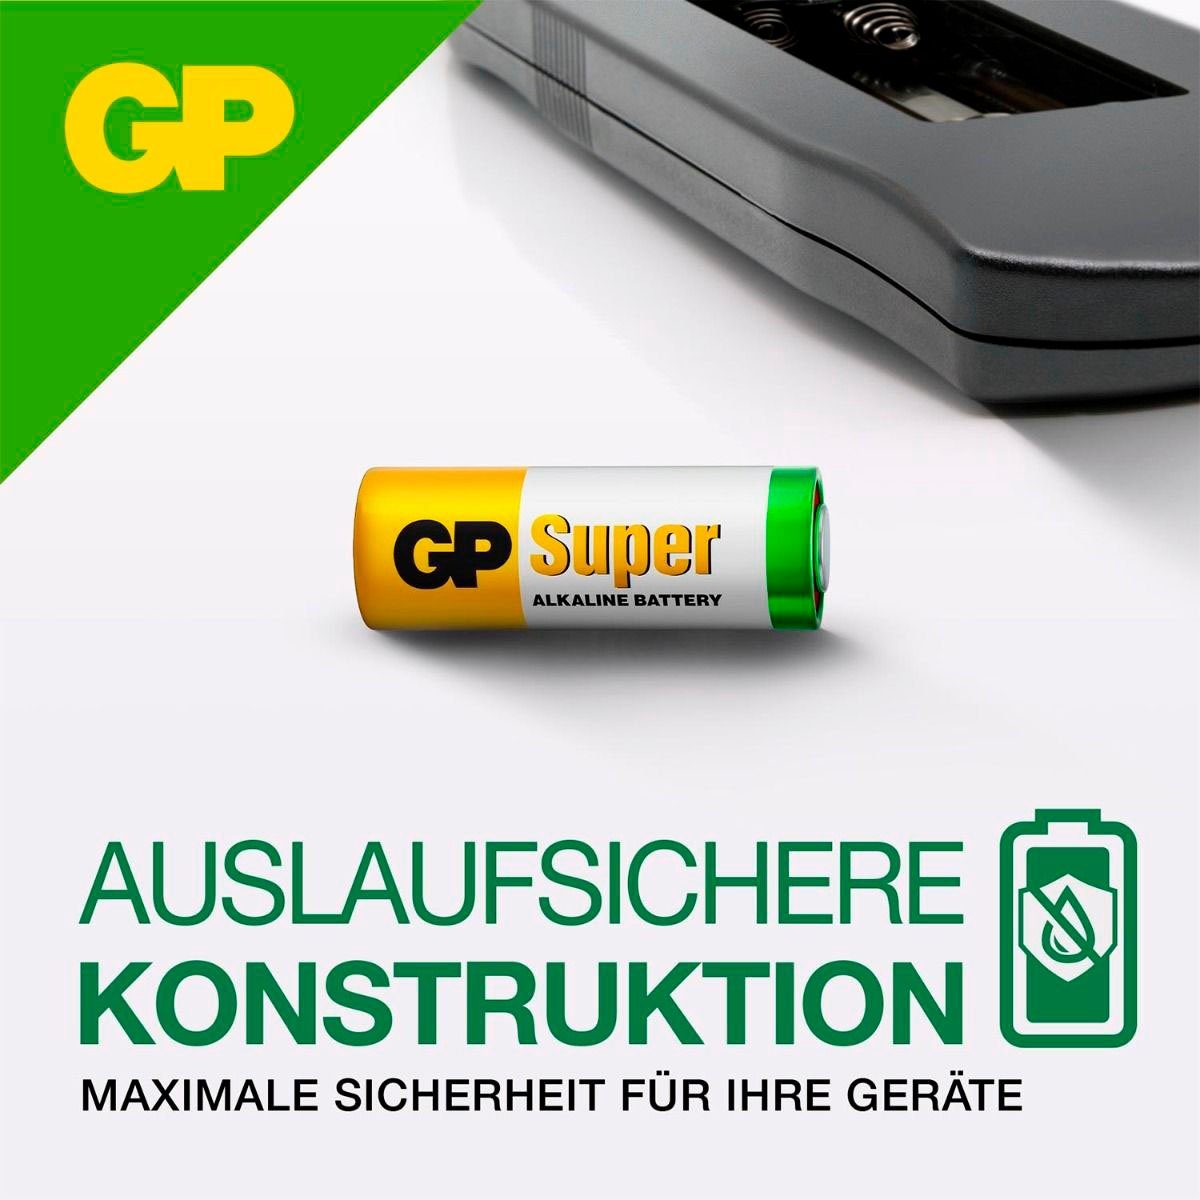 GP Batteries 5er Pack Rundzellenbatterie 5 Batterie, Alkaline 23A (12 St) V